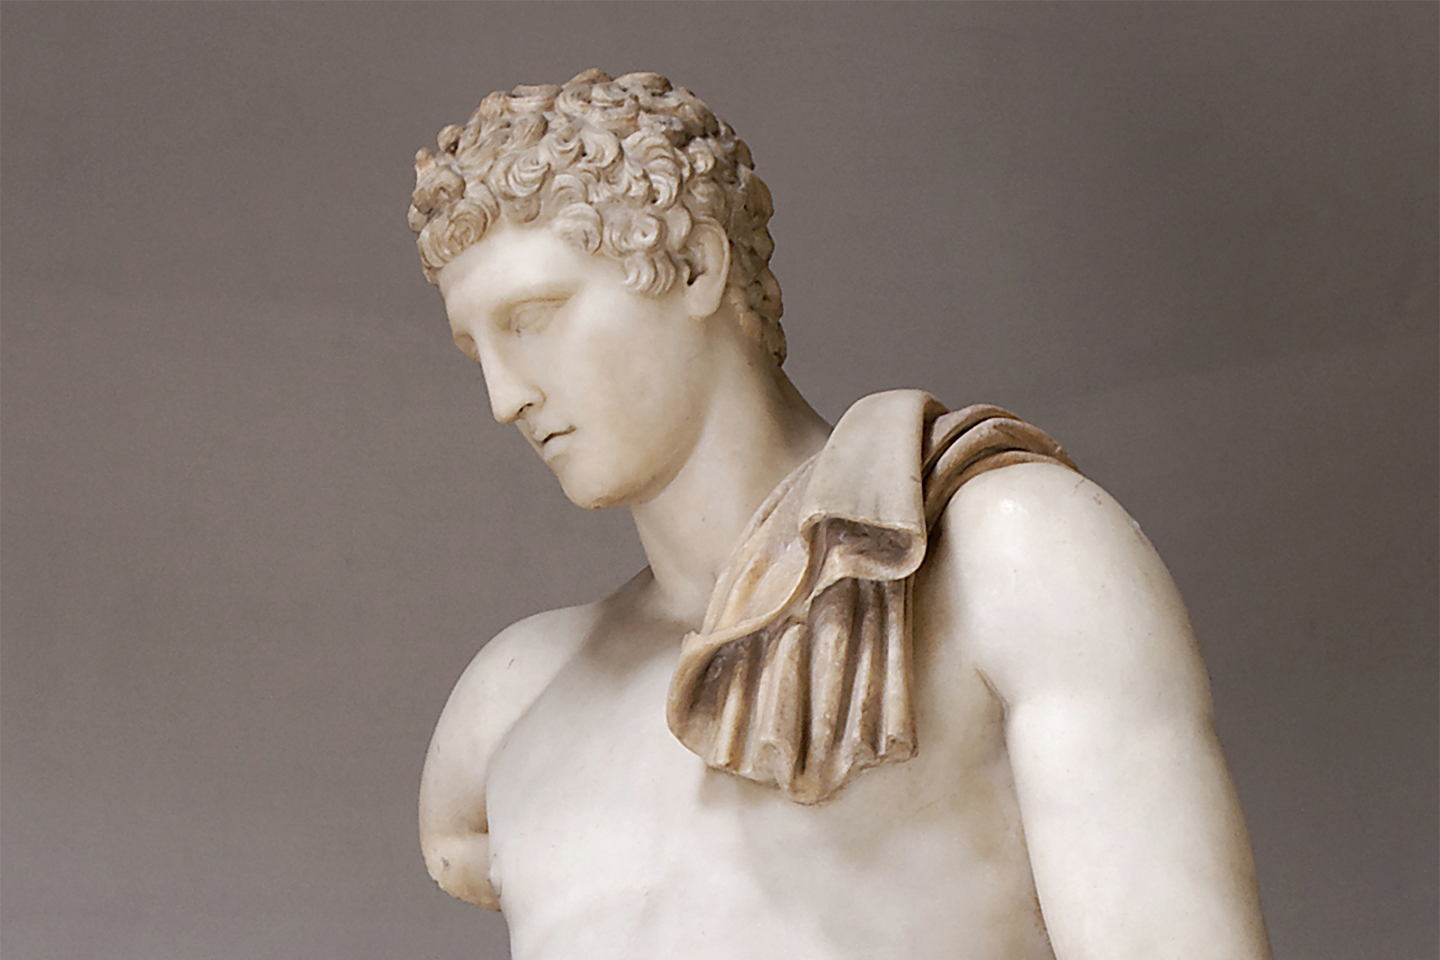 hermes greek god statue